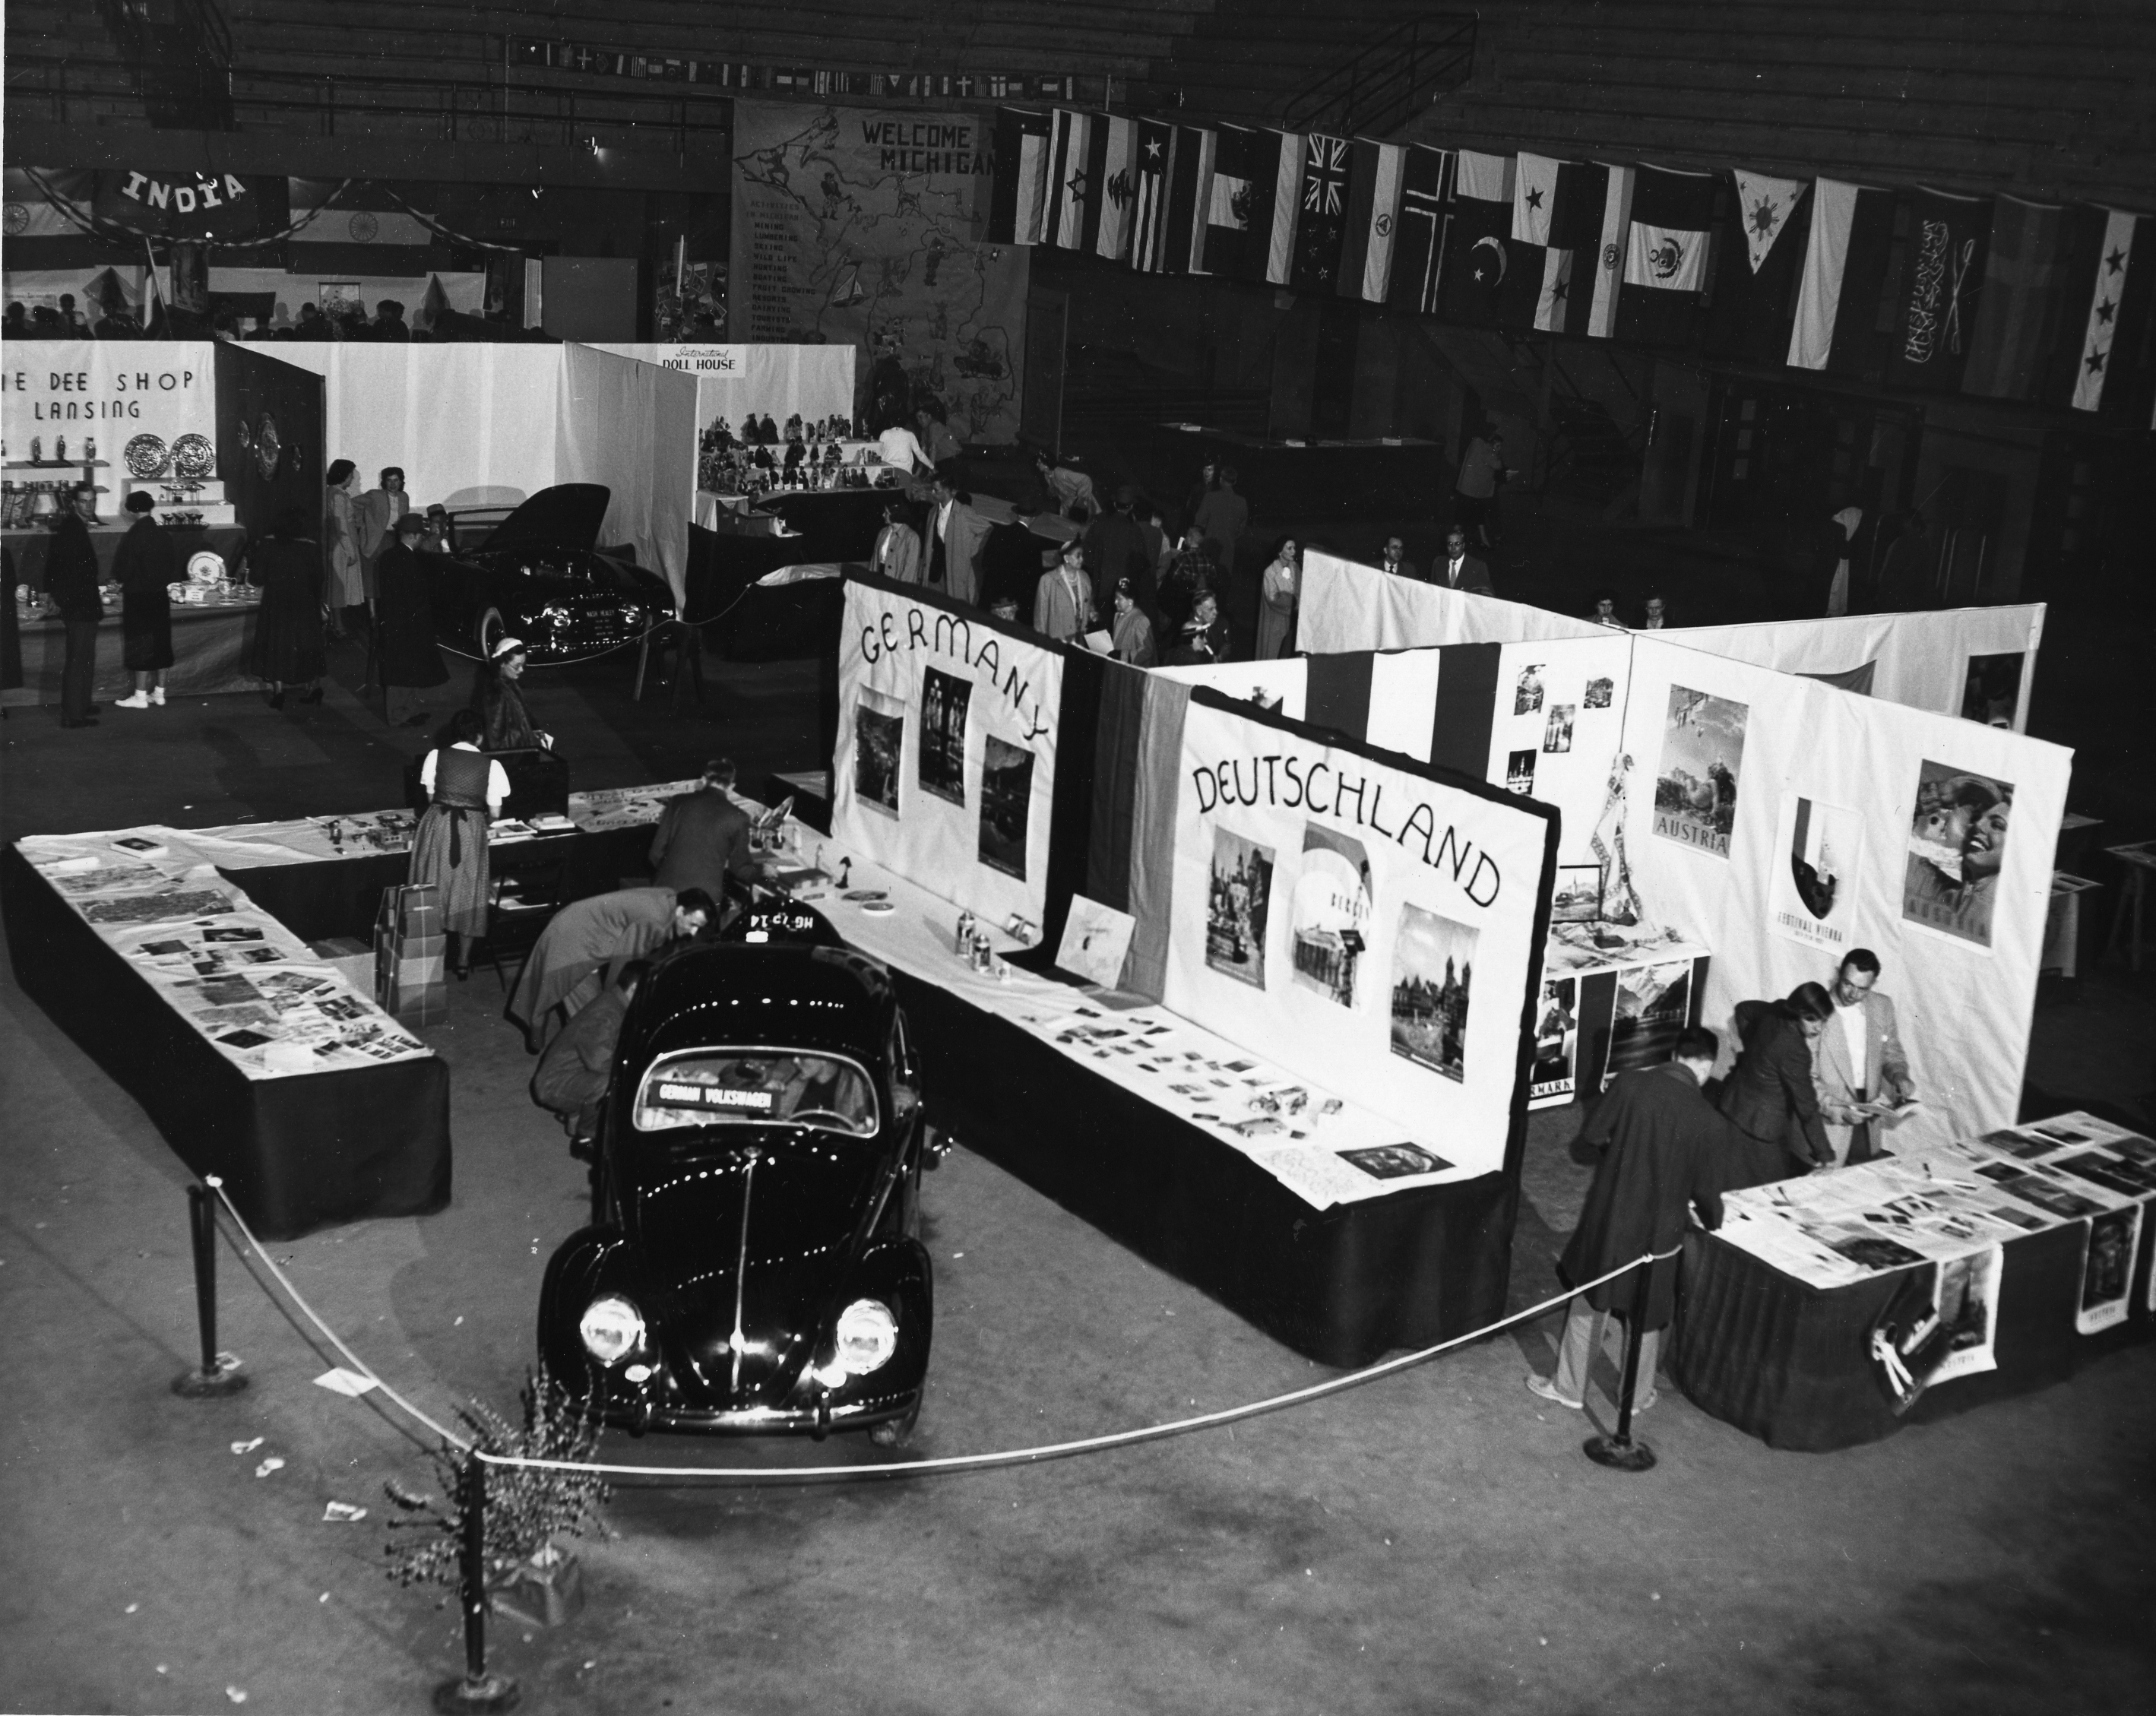 Car exhibit at the International Festival, 1948